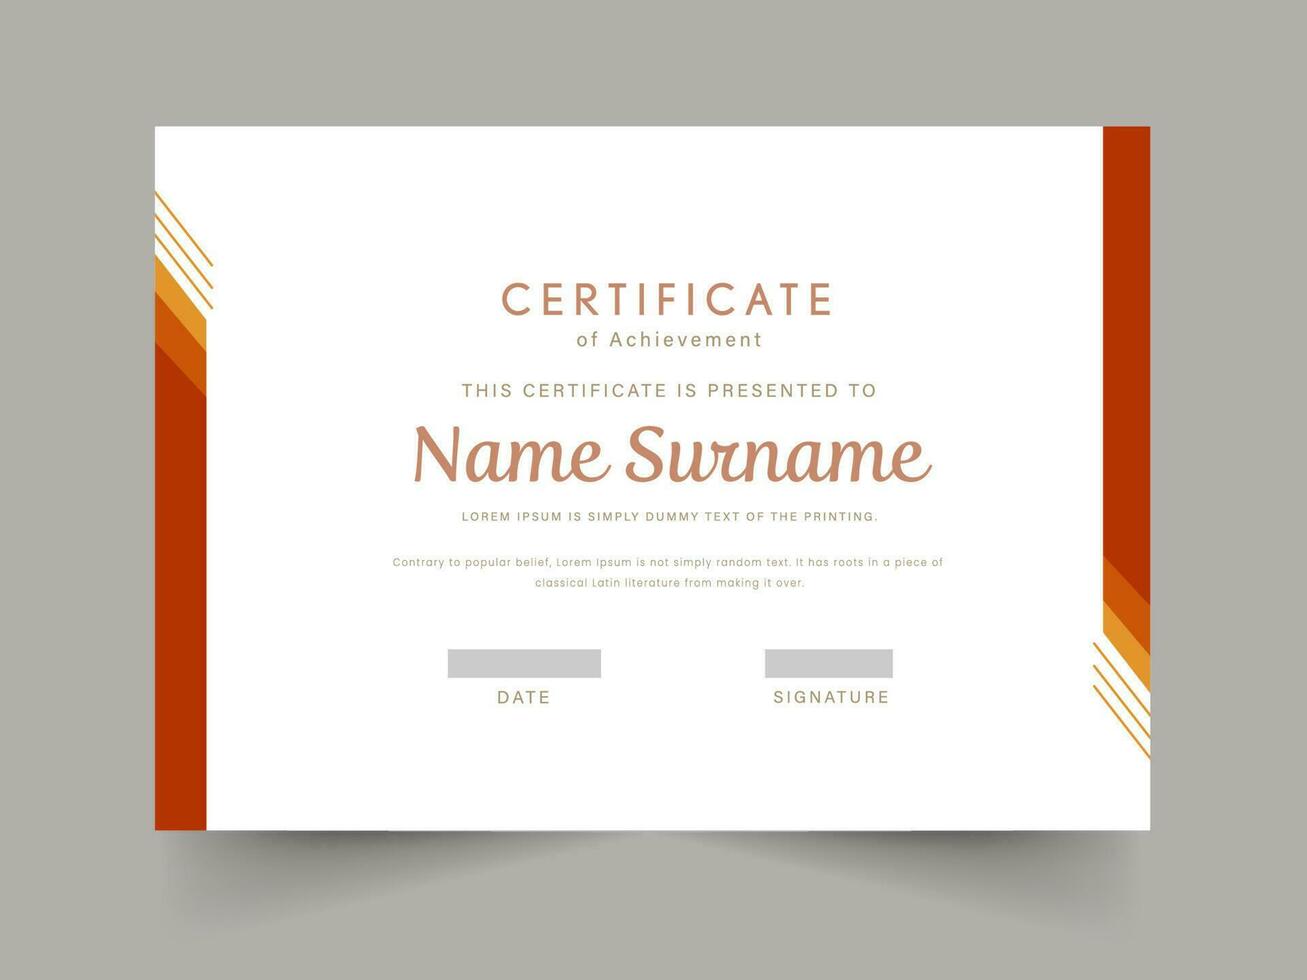 Certificate Of Achievement Award Template Design In White And Orange Color. vector